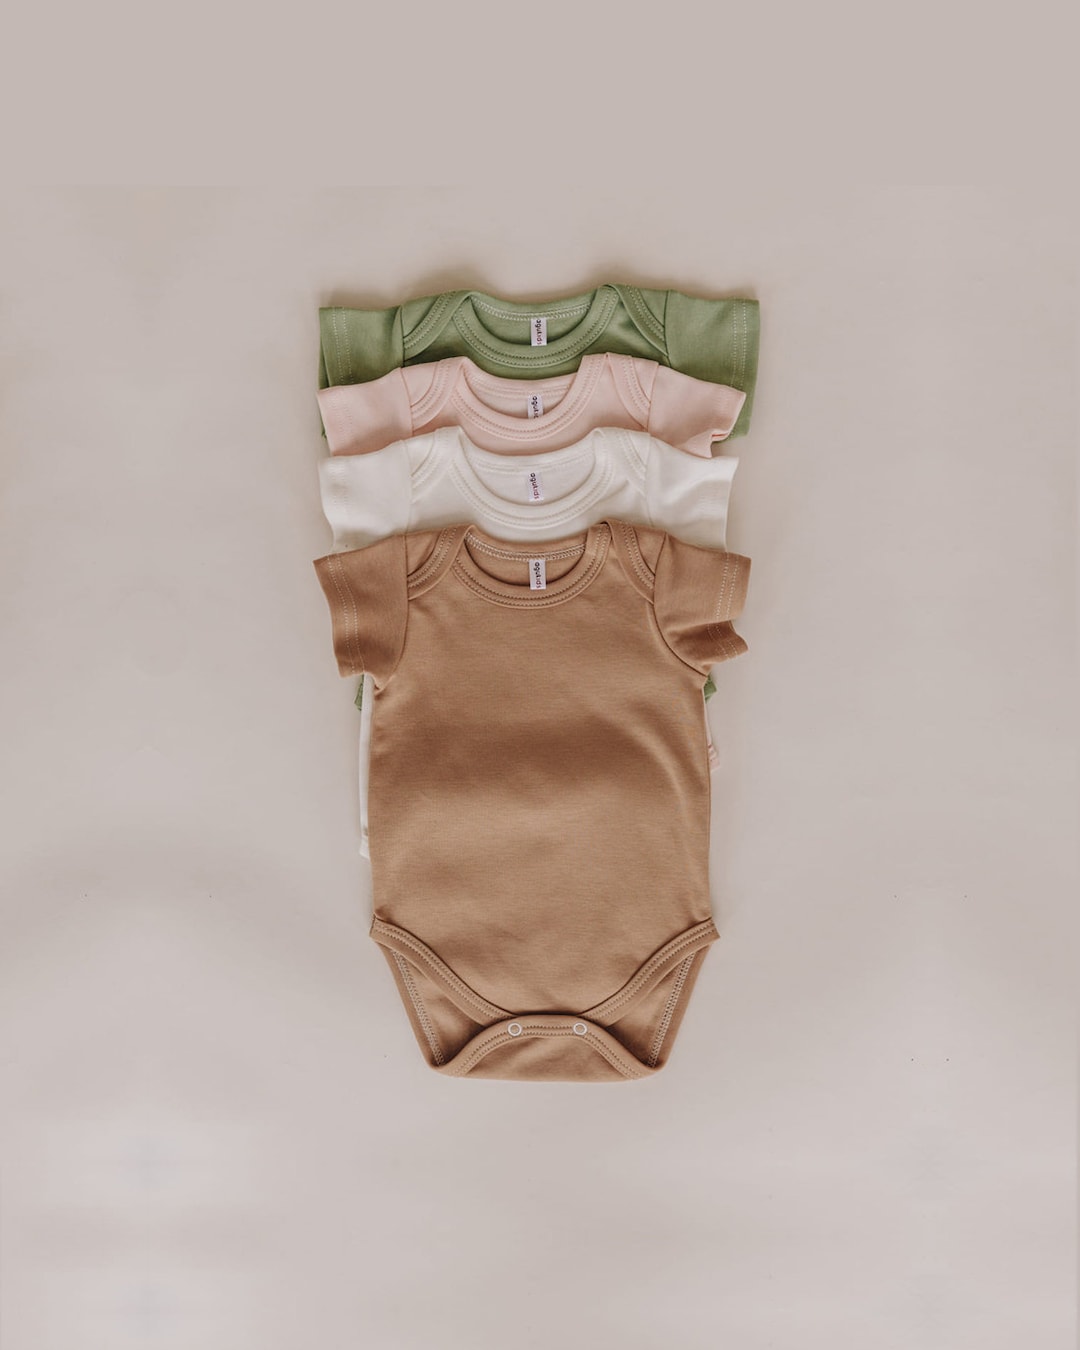 rubber duck' Organic Short-Sleeved Baby Bodysuit